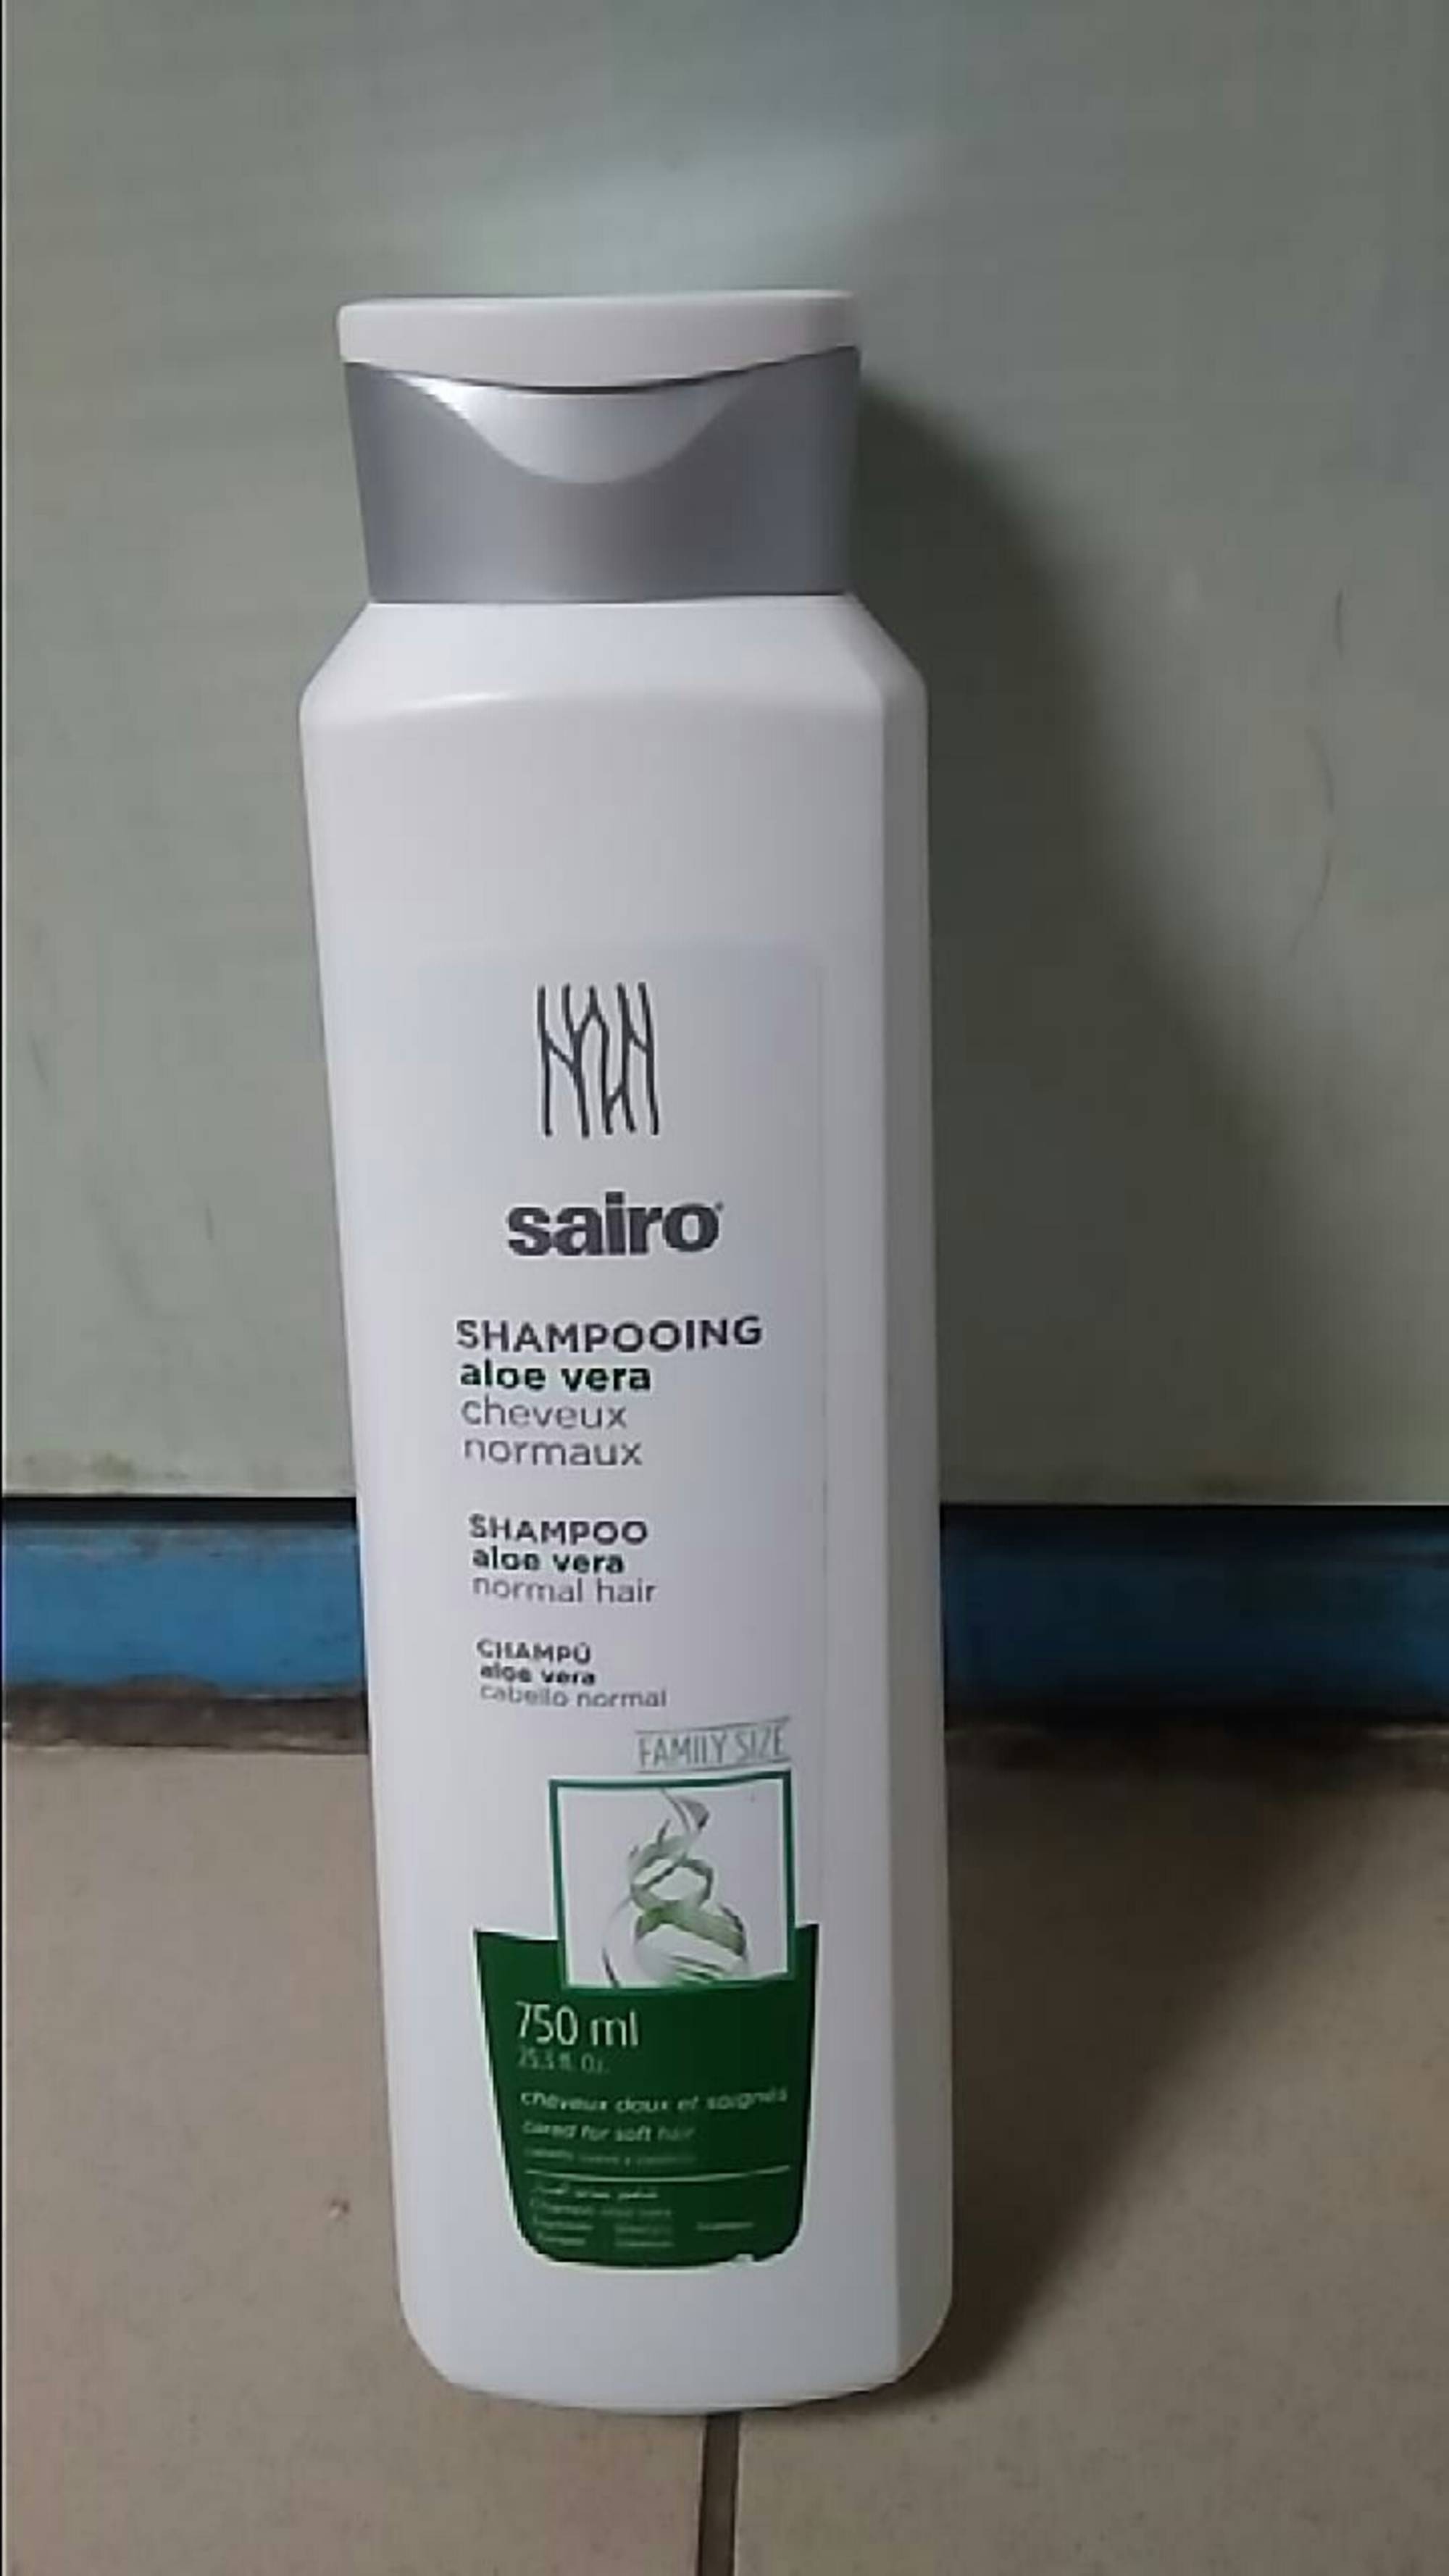 SAIRO - Shampooing aloe vera